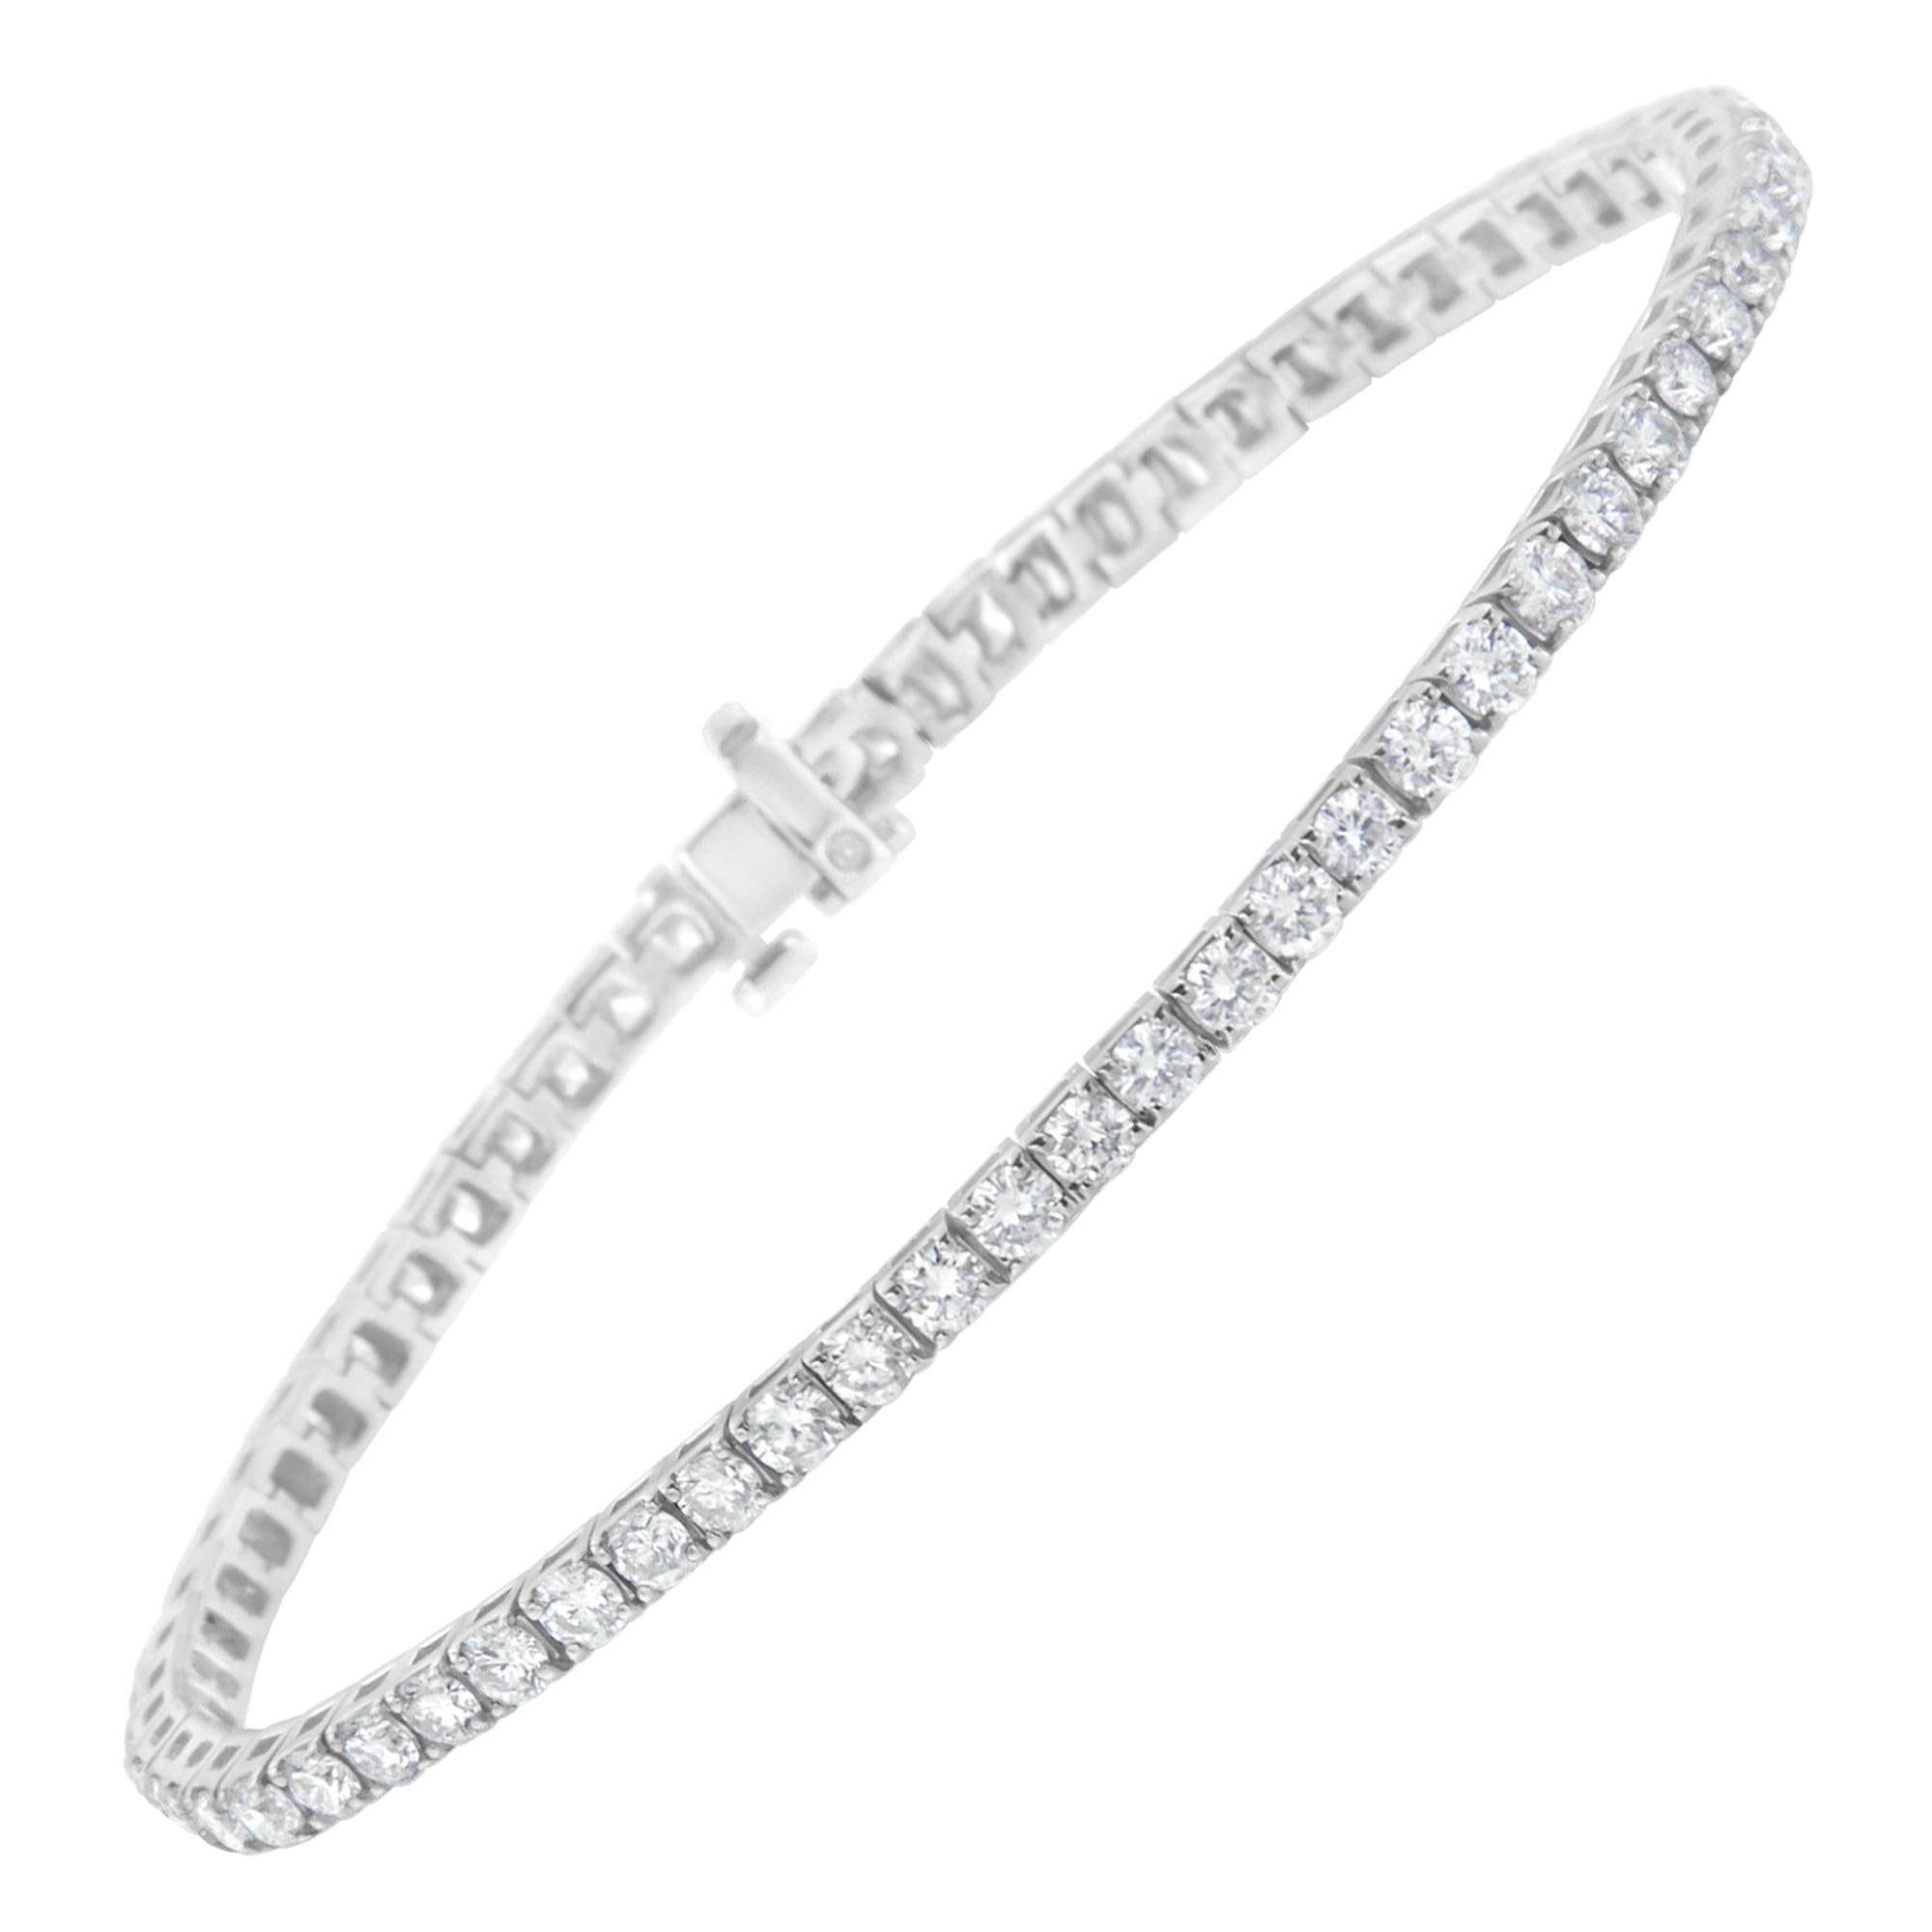 Bracelet tennis en or blanc 14 carats avec diamants de 5,0 carats certifiés IGI 